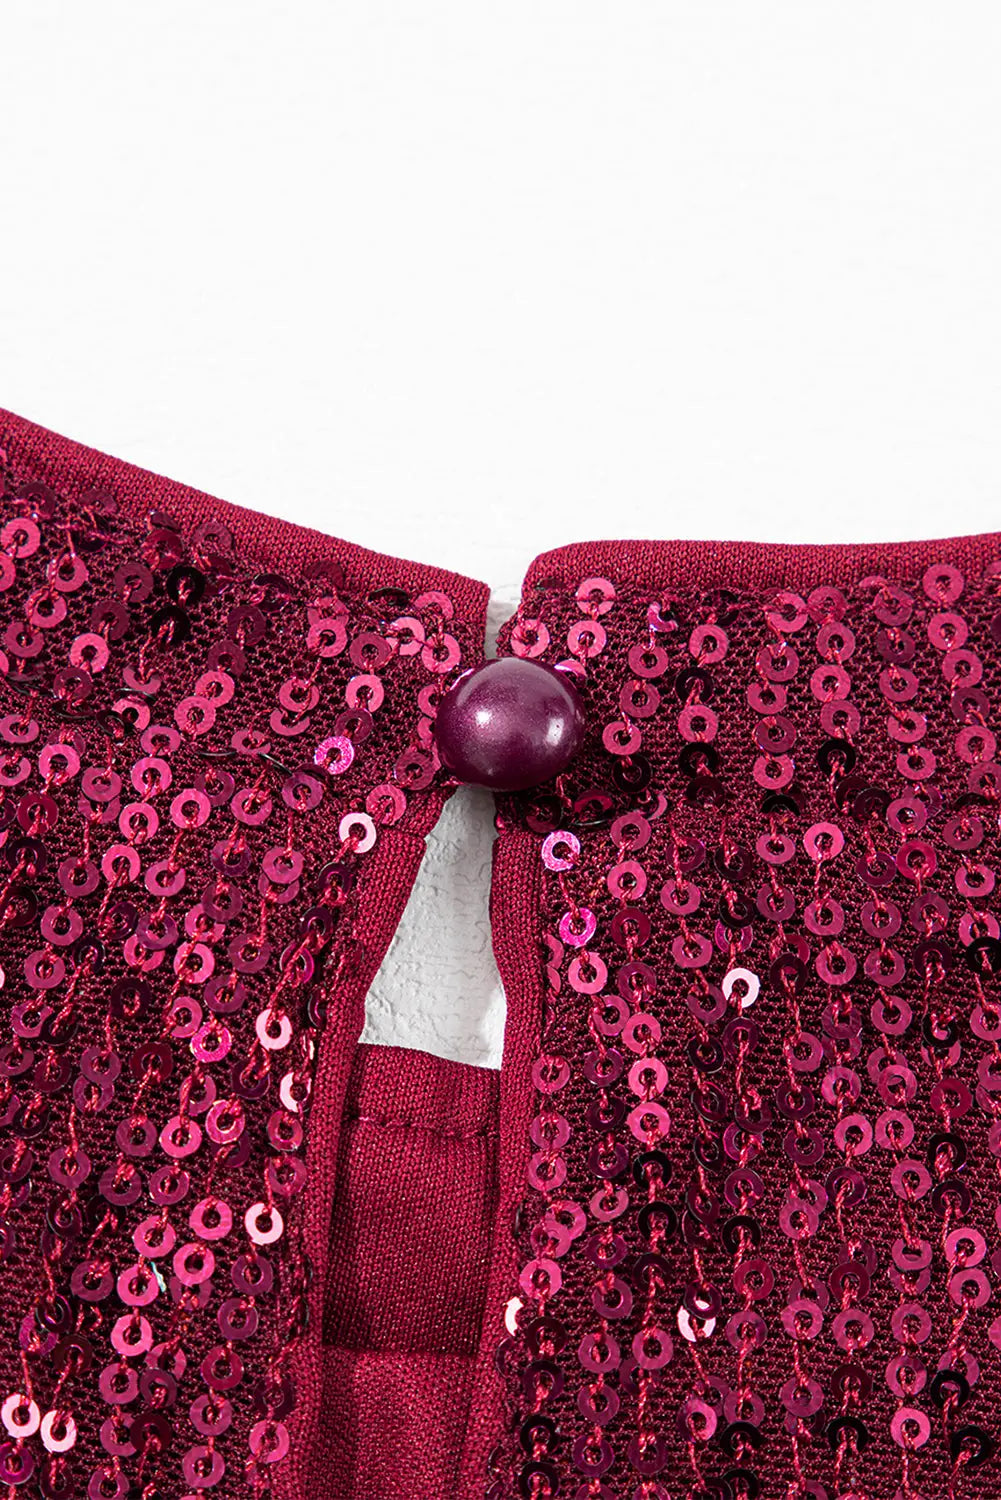 Burgundy glittering sequin short bubble sleeve blouse - tops